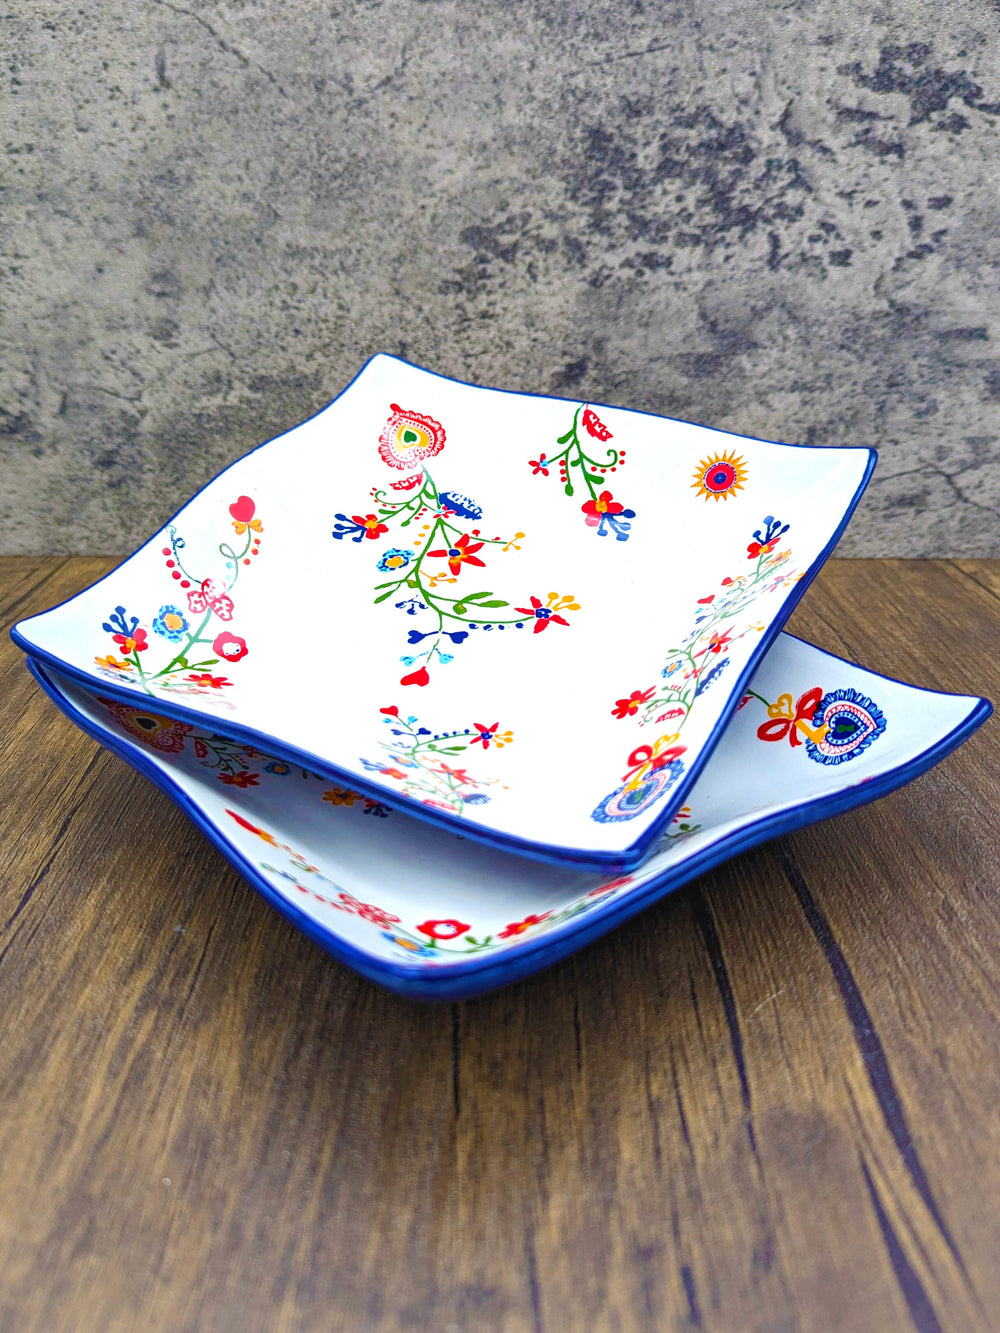 Portuguese Pottery Alcobaça Ceramic Small Serving Dish Floral - Set of 2